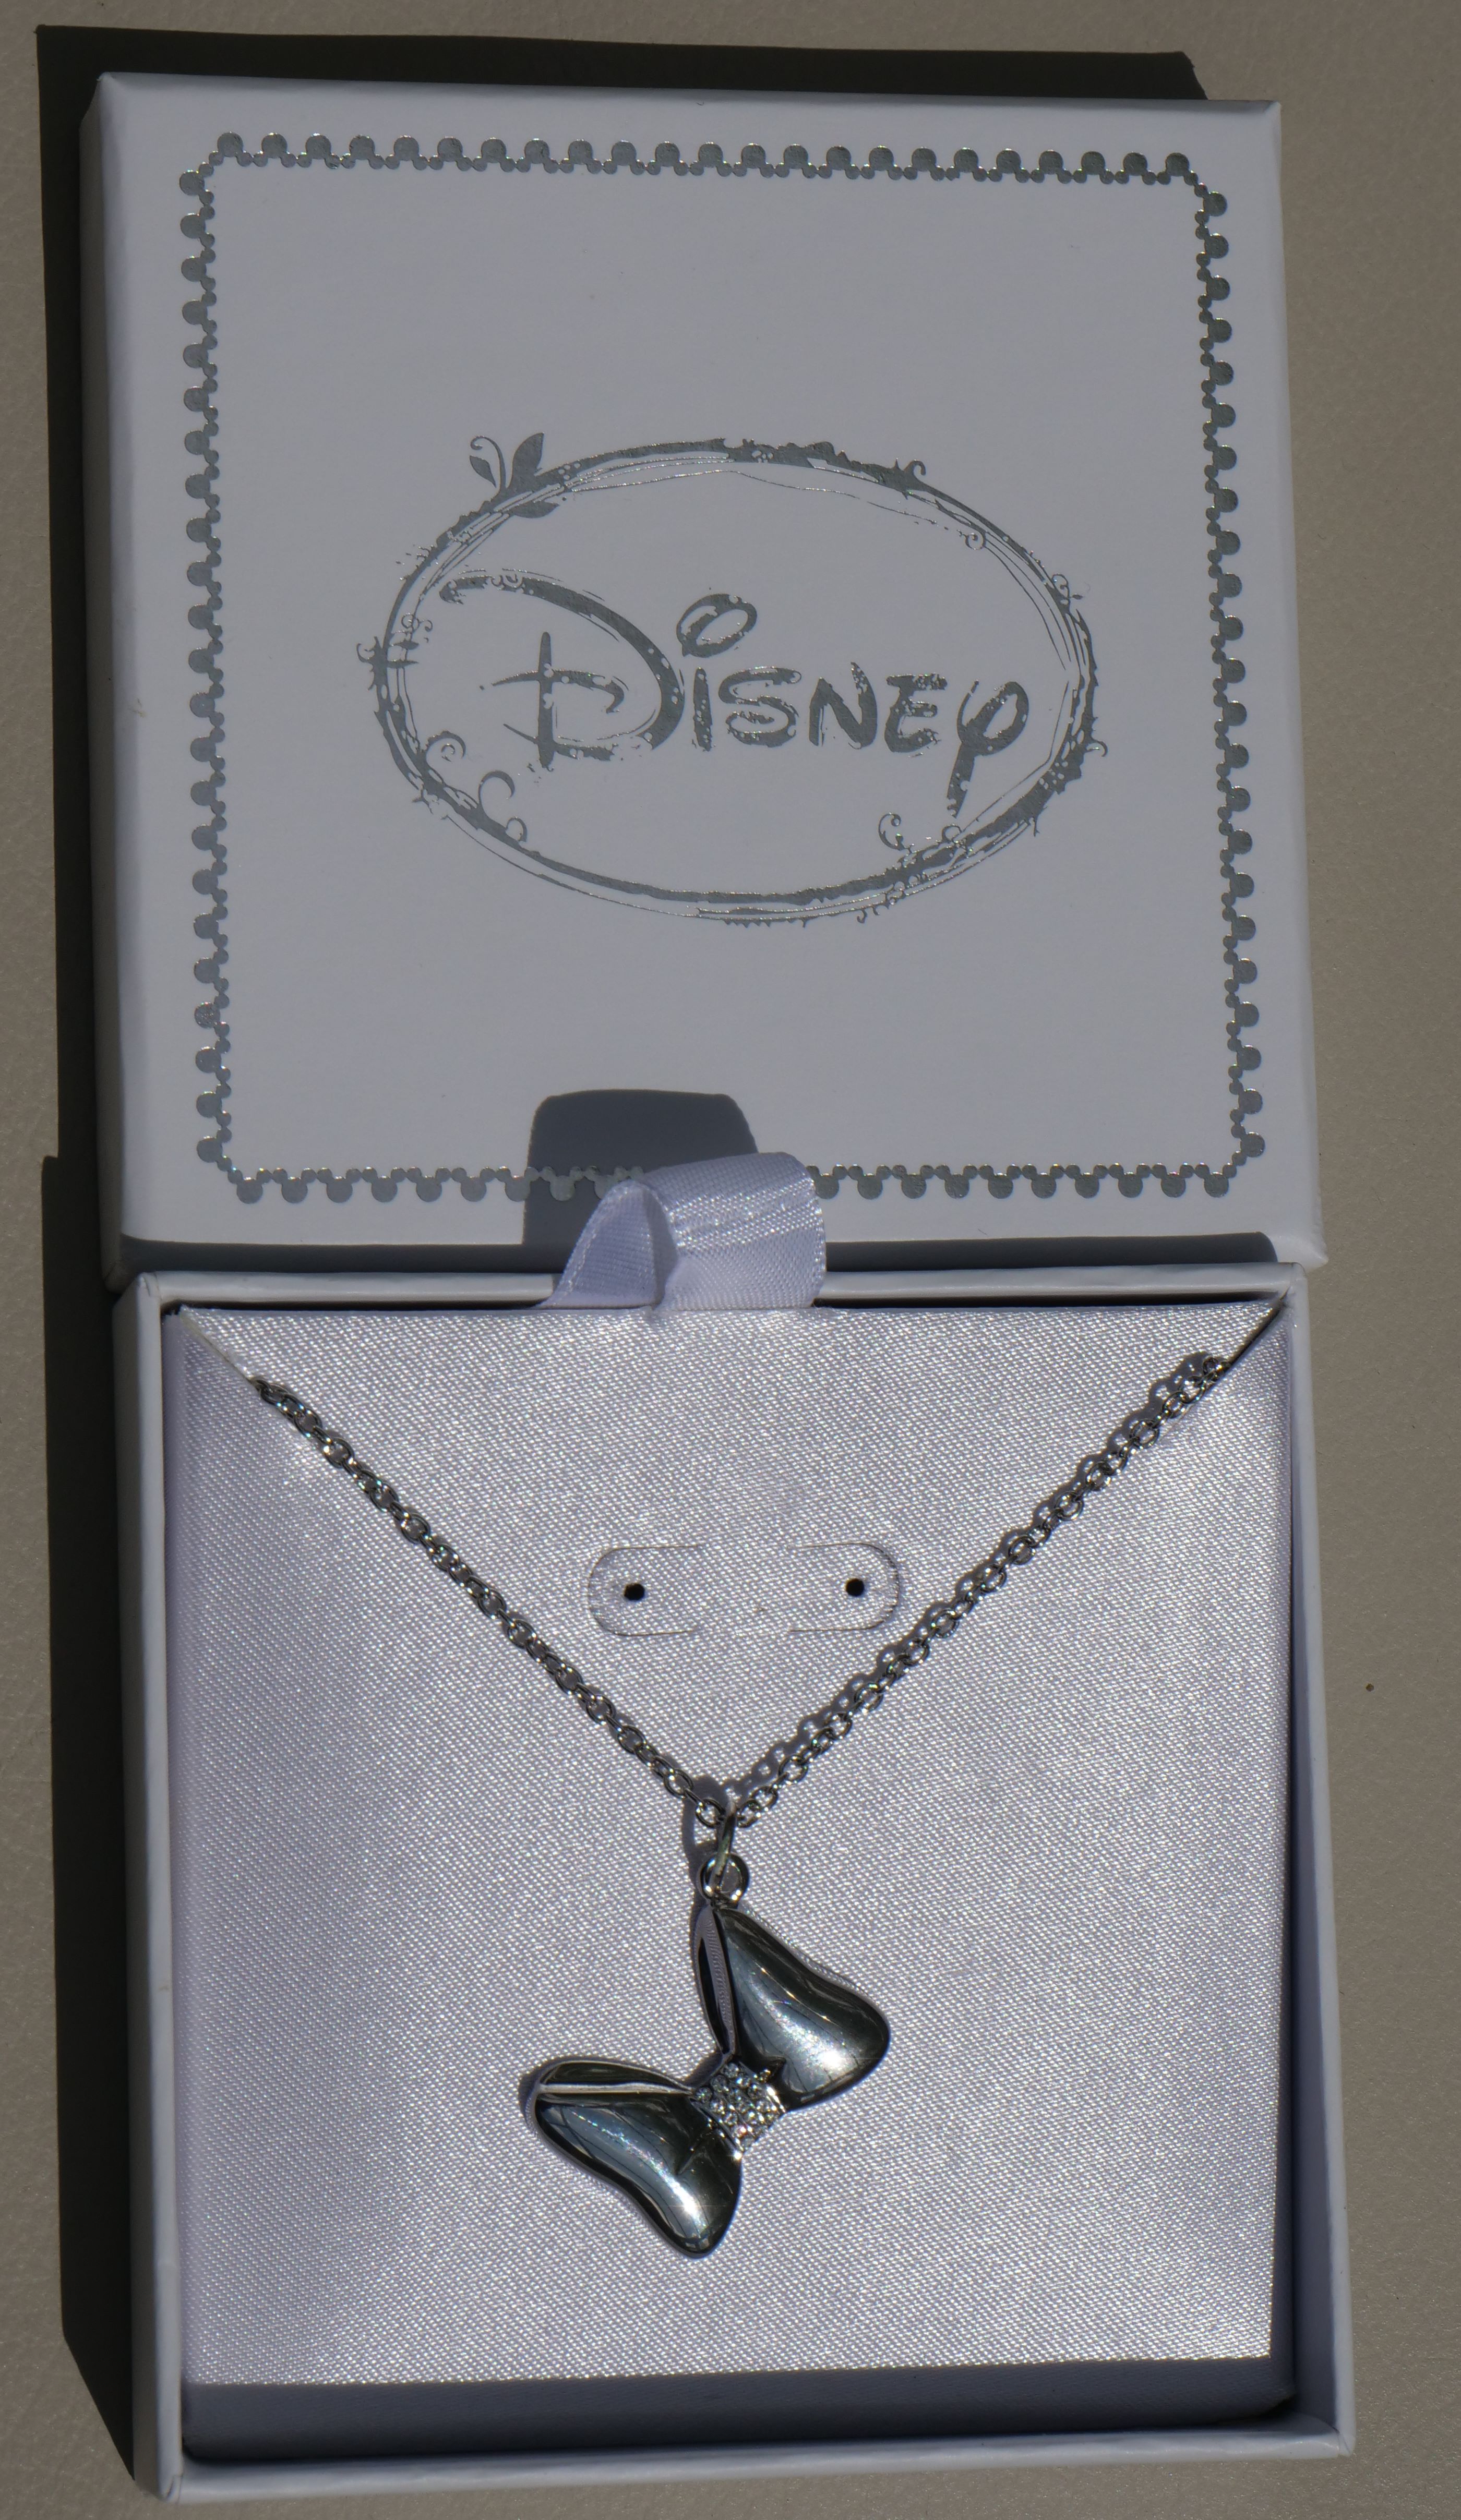 88 x Genuine Disney Bow pendants in Disney presentation box 